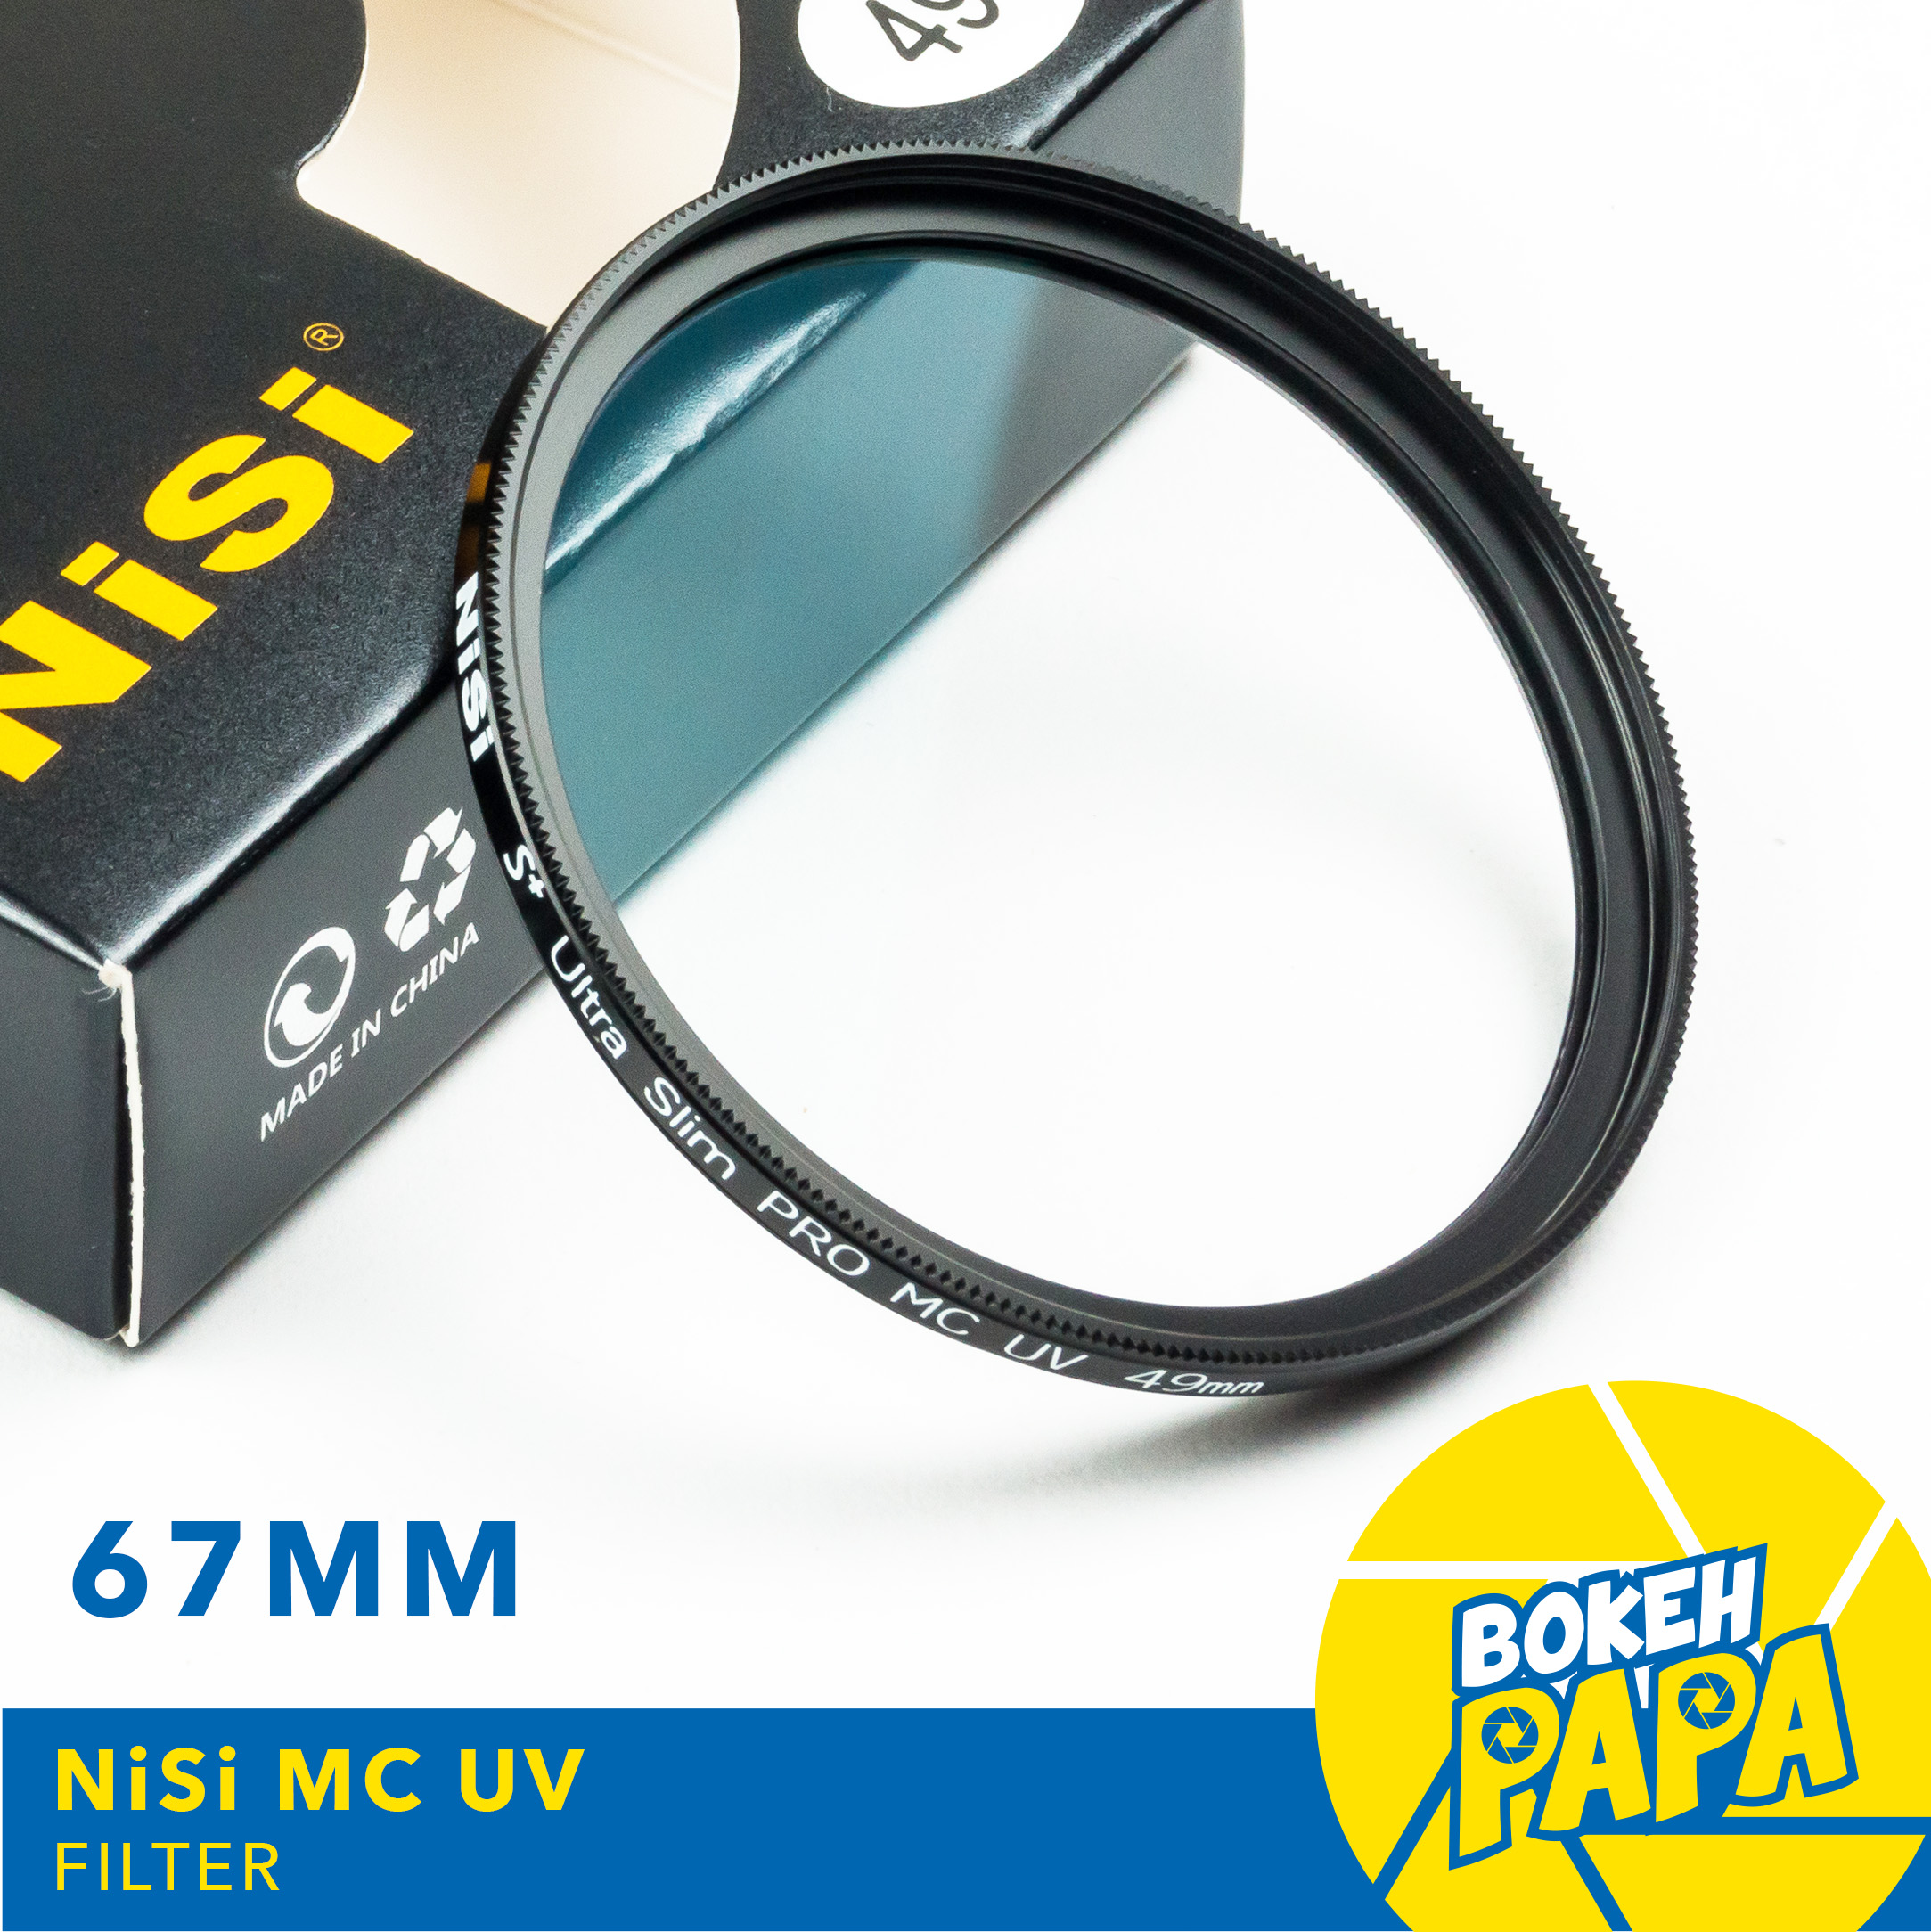 NISI 67mm MC UV Filter ที่กรองรังสียูวีโซด์ขนาดบางเป็นพิเศษ Professional MC ตัวกรองยูวีด้านคู่ 12 การเคลือบหลายชั้นกรอง ( NISI MC UV Filter 67mm )( ฟิลเตอร์ 67 มิลลิเมตร บางพิเศษ )